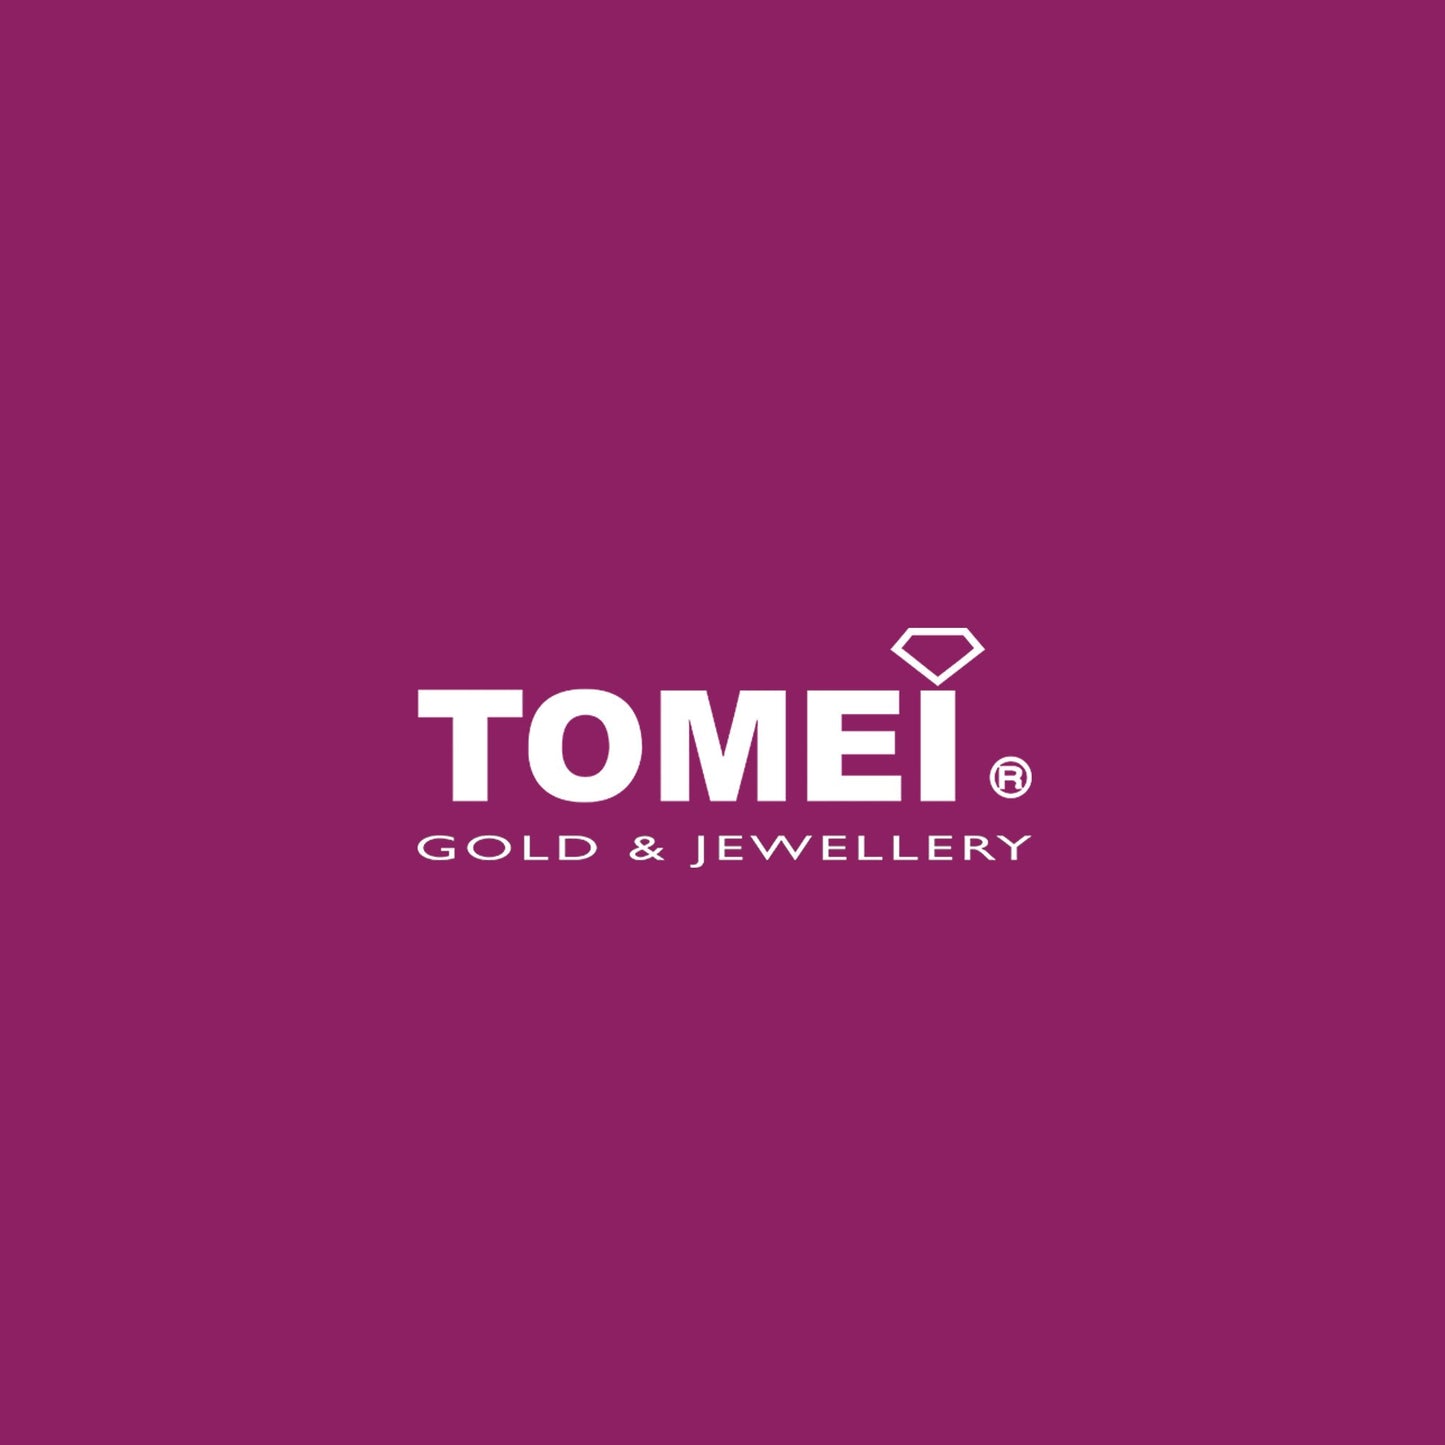 TOMEI Rouge Collection, Auspicious Cloud Necklace Rose Gold 750